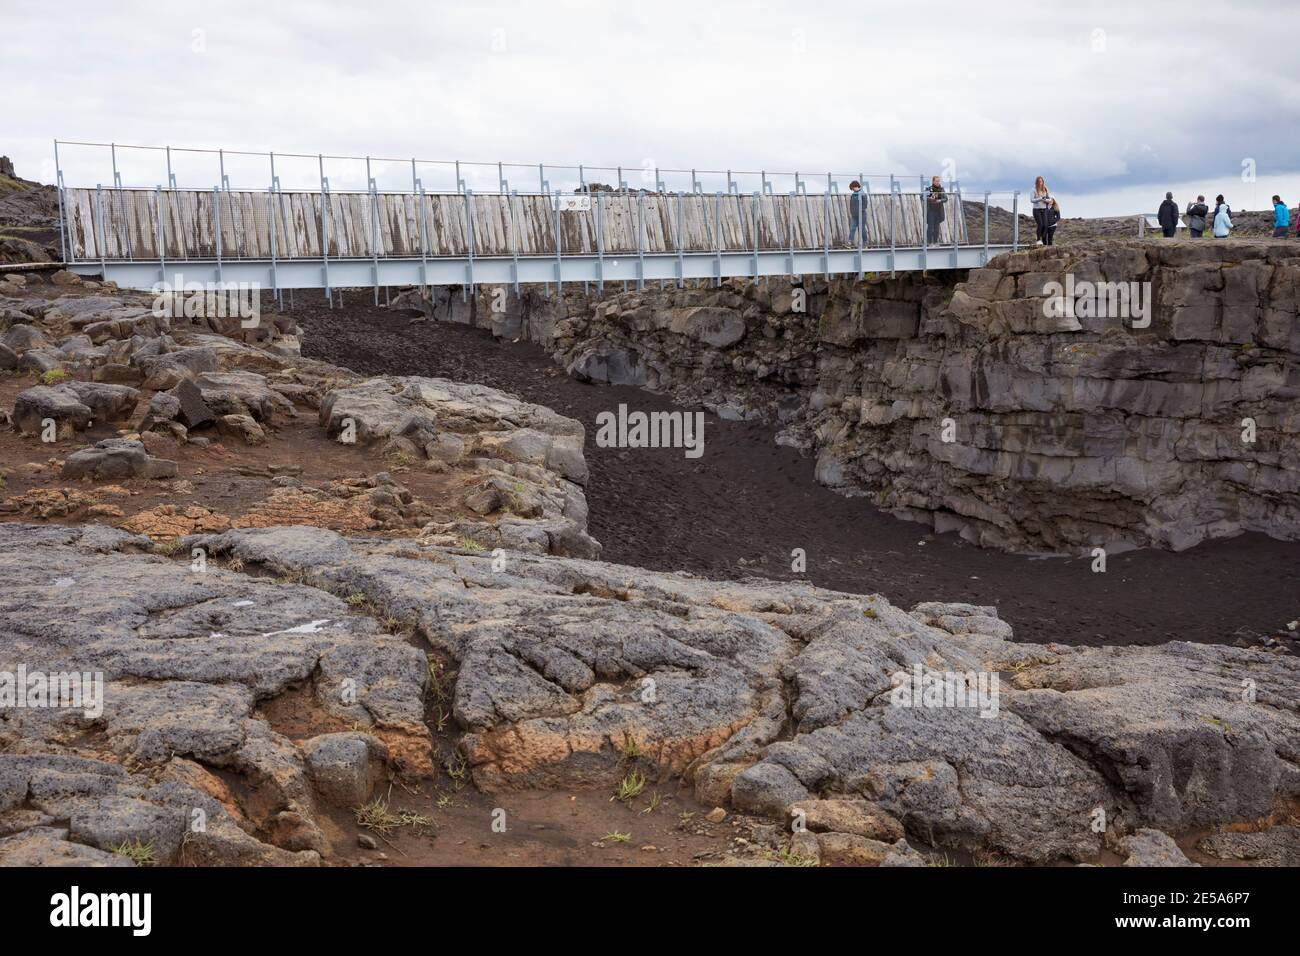 Valley Midlinda, Bru milli Heimsalfa, bridge over continents, rift valley between two tectonic plates, Iceland Stock Photo